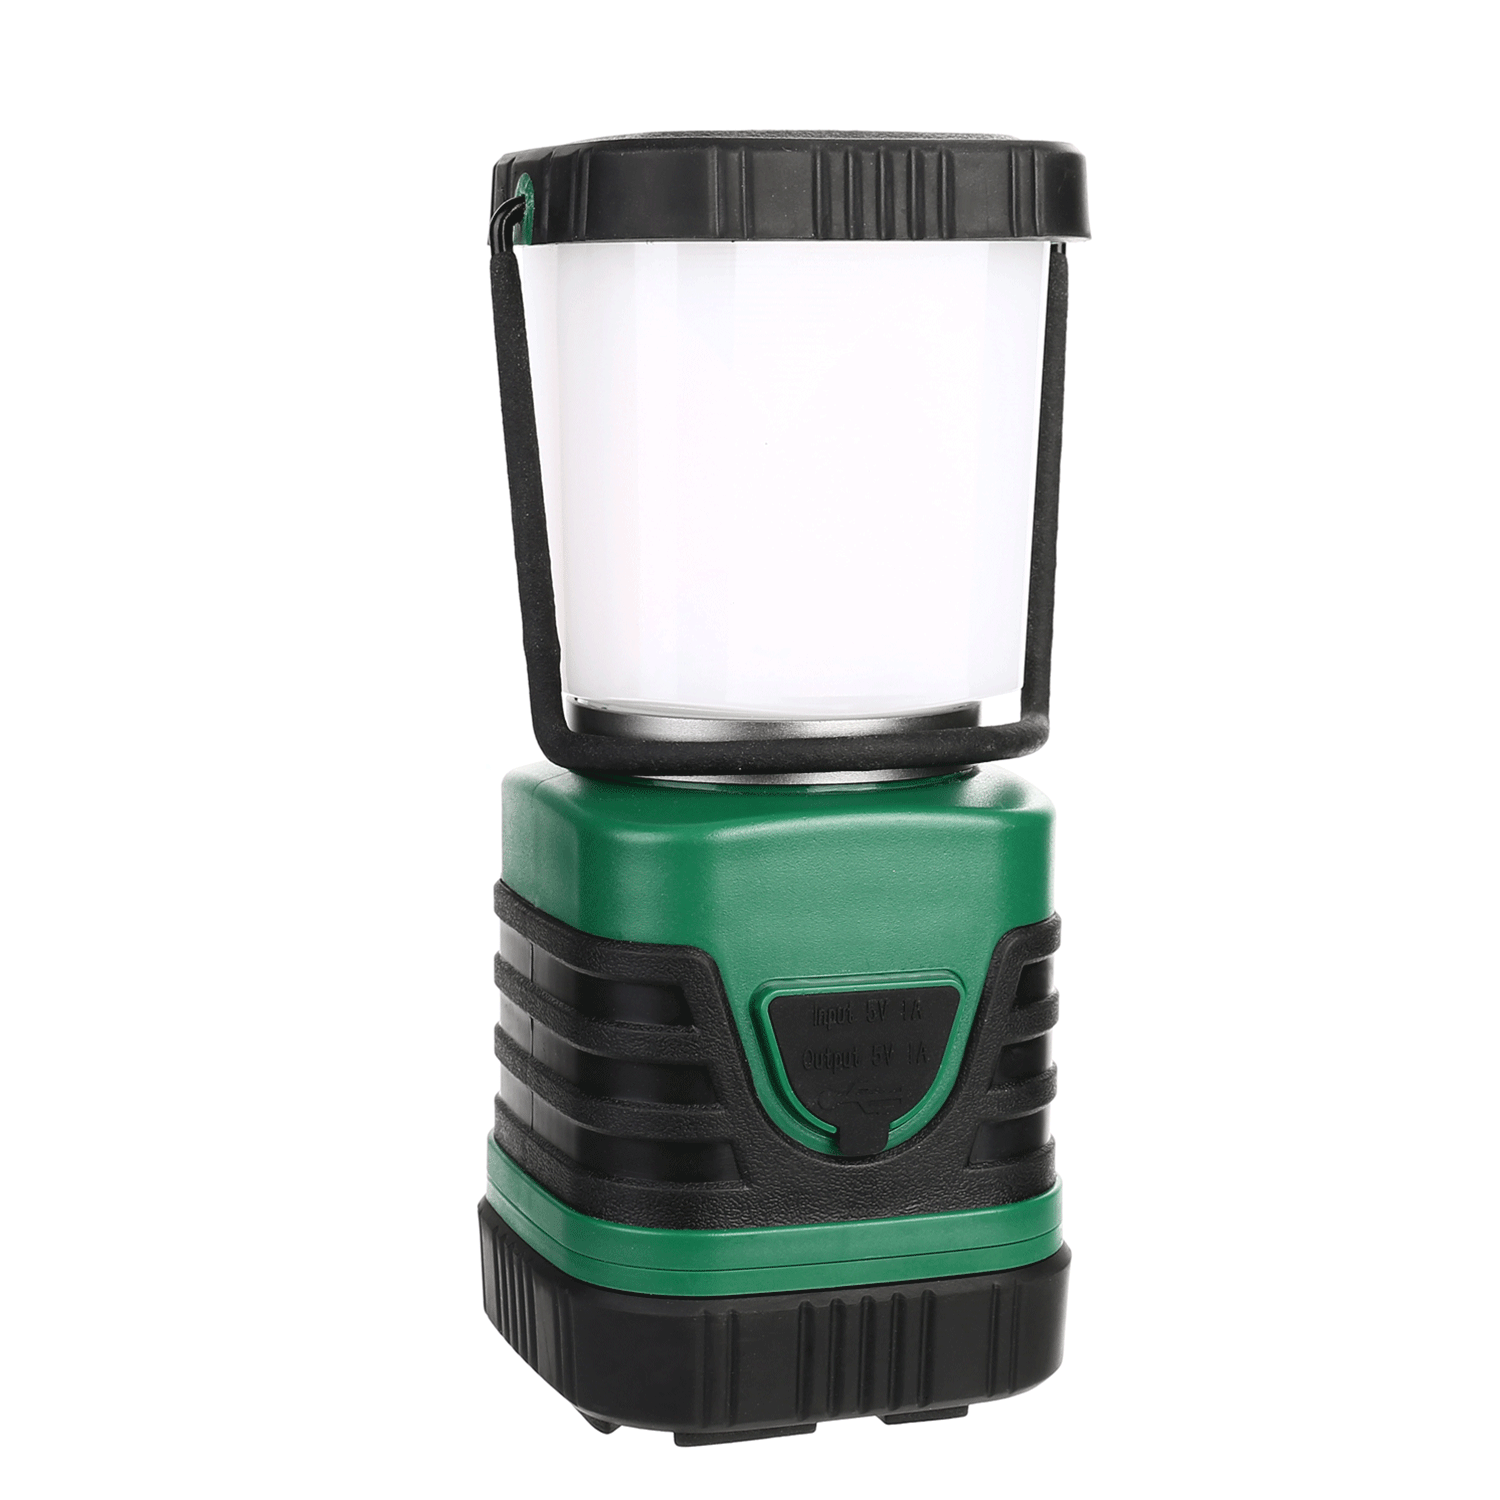 Lepro LED Camping Lantern Rechargeable , 1000LM 4400mAh Long